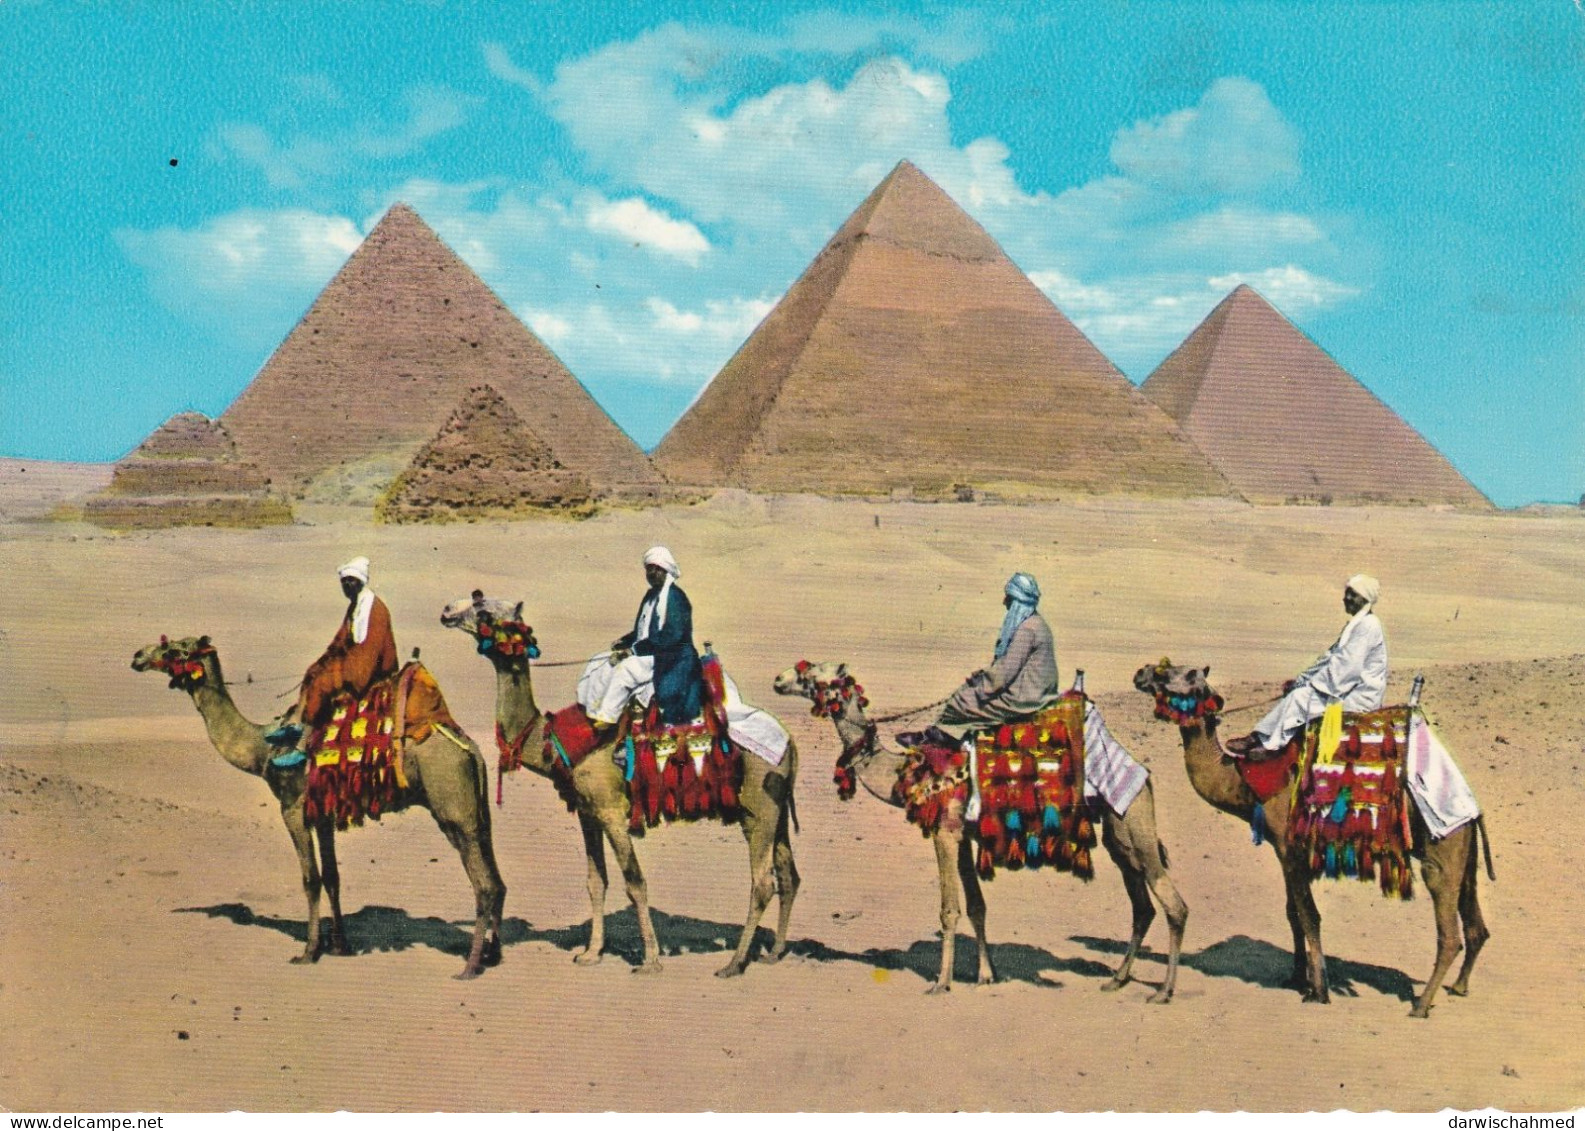 - ÄGYPTEN - EGYPT - DYNASTIE- ÄGYPTOLOGIE - SPHINX AUF CEOPSPYRAMIDE - POST CARD - USED - Pyramids